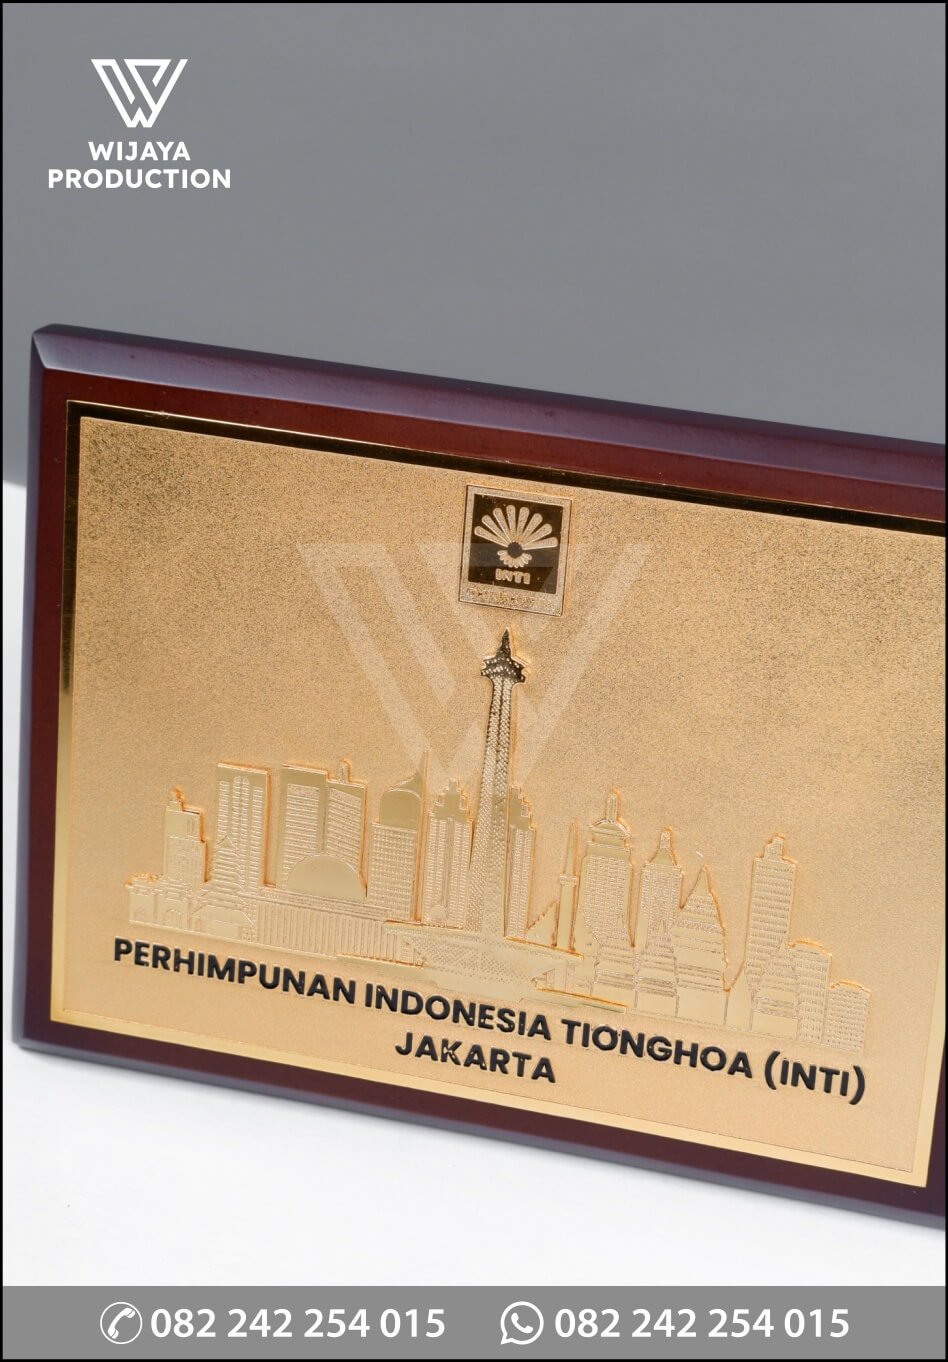 Detail Plakat Kayu Perhimpunan Indonesia Tionghoa Jakarta